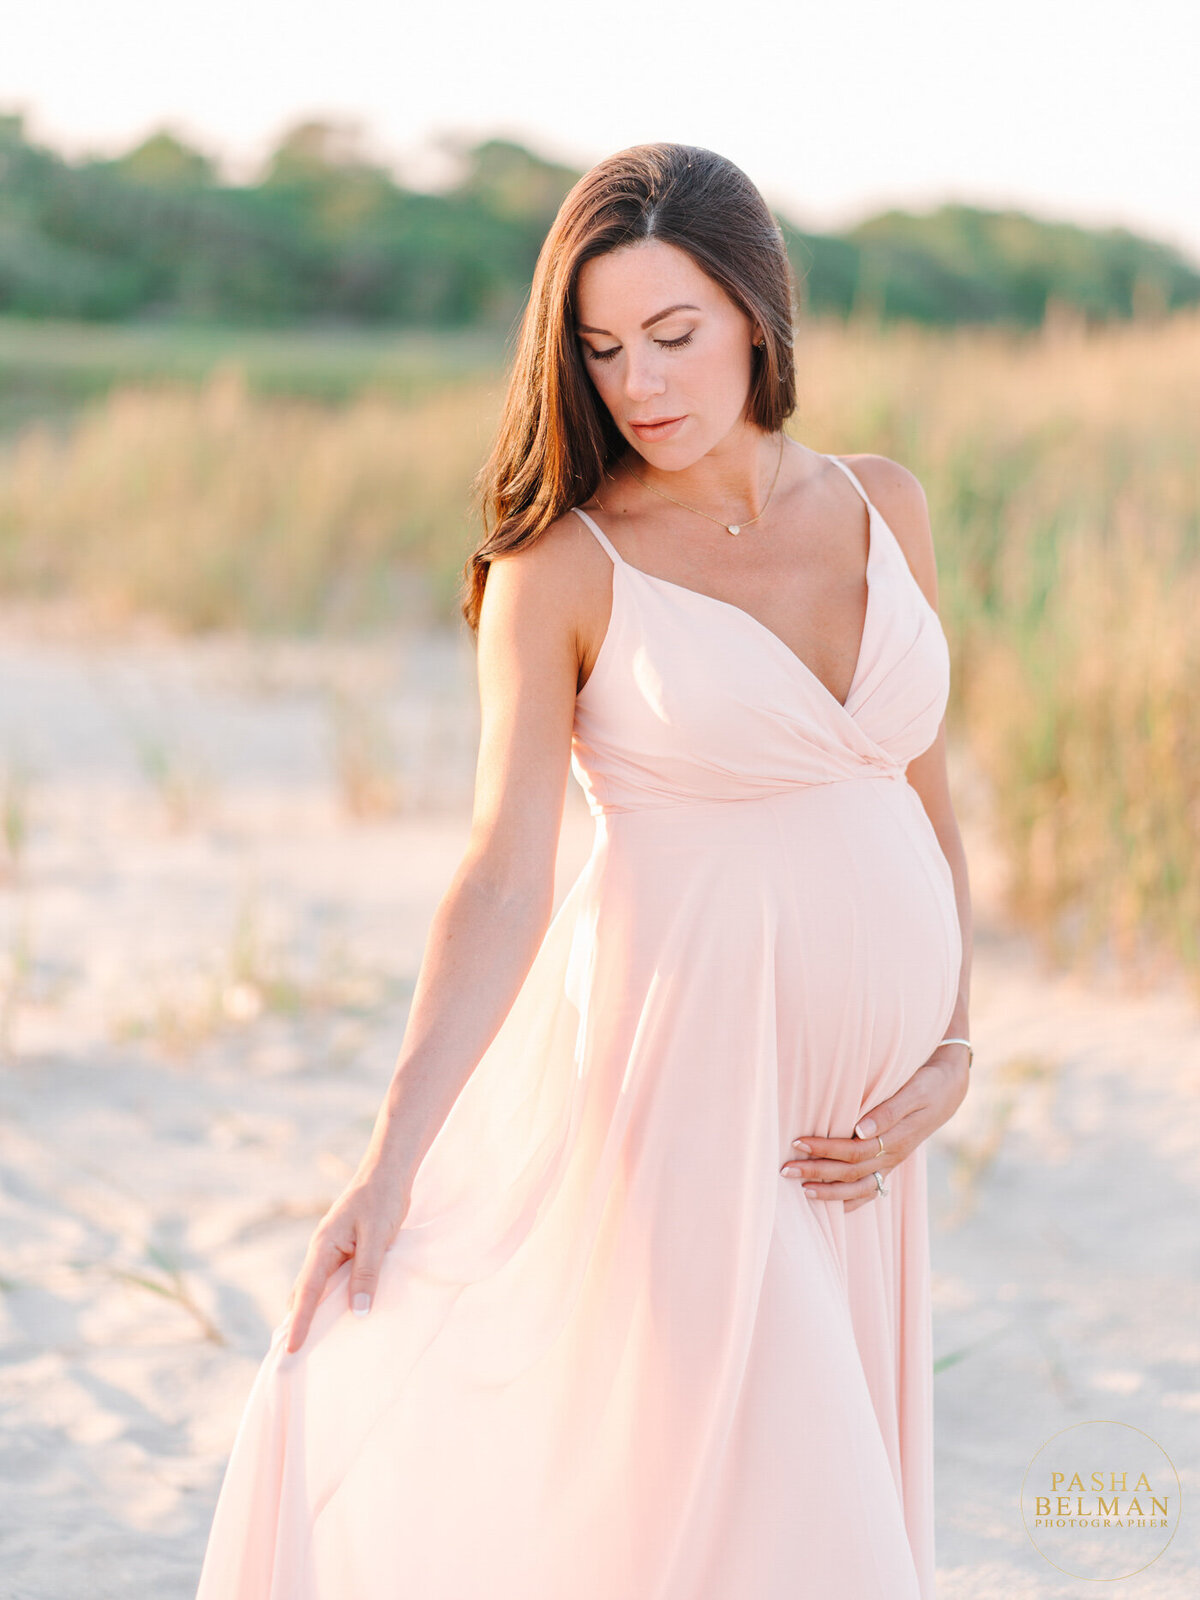 Myrtle Beach Maternity Photographer